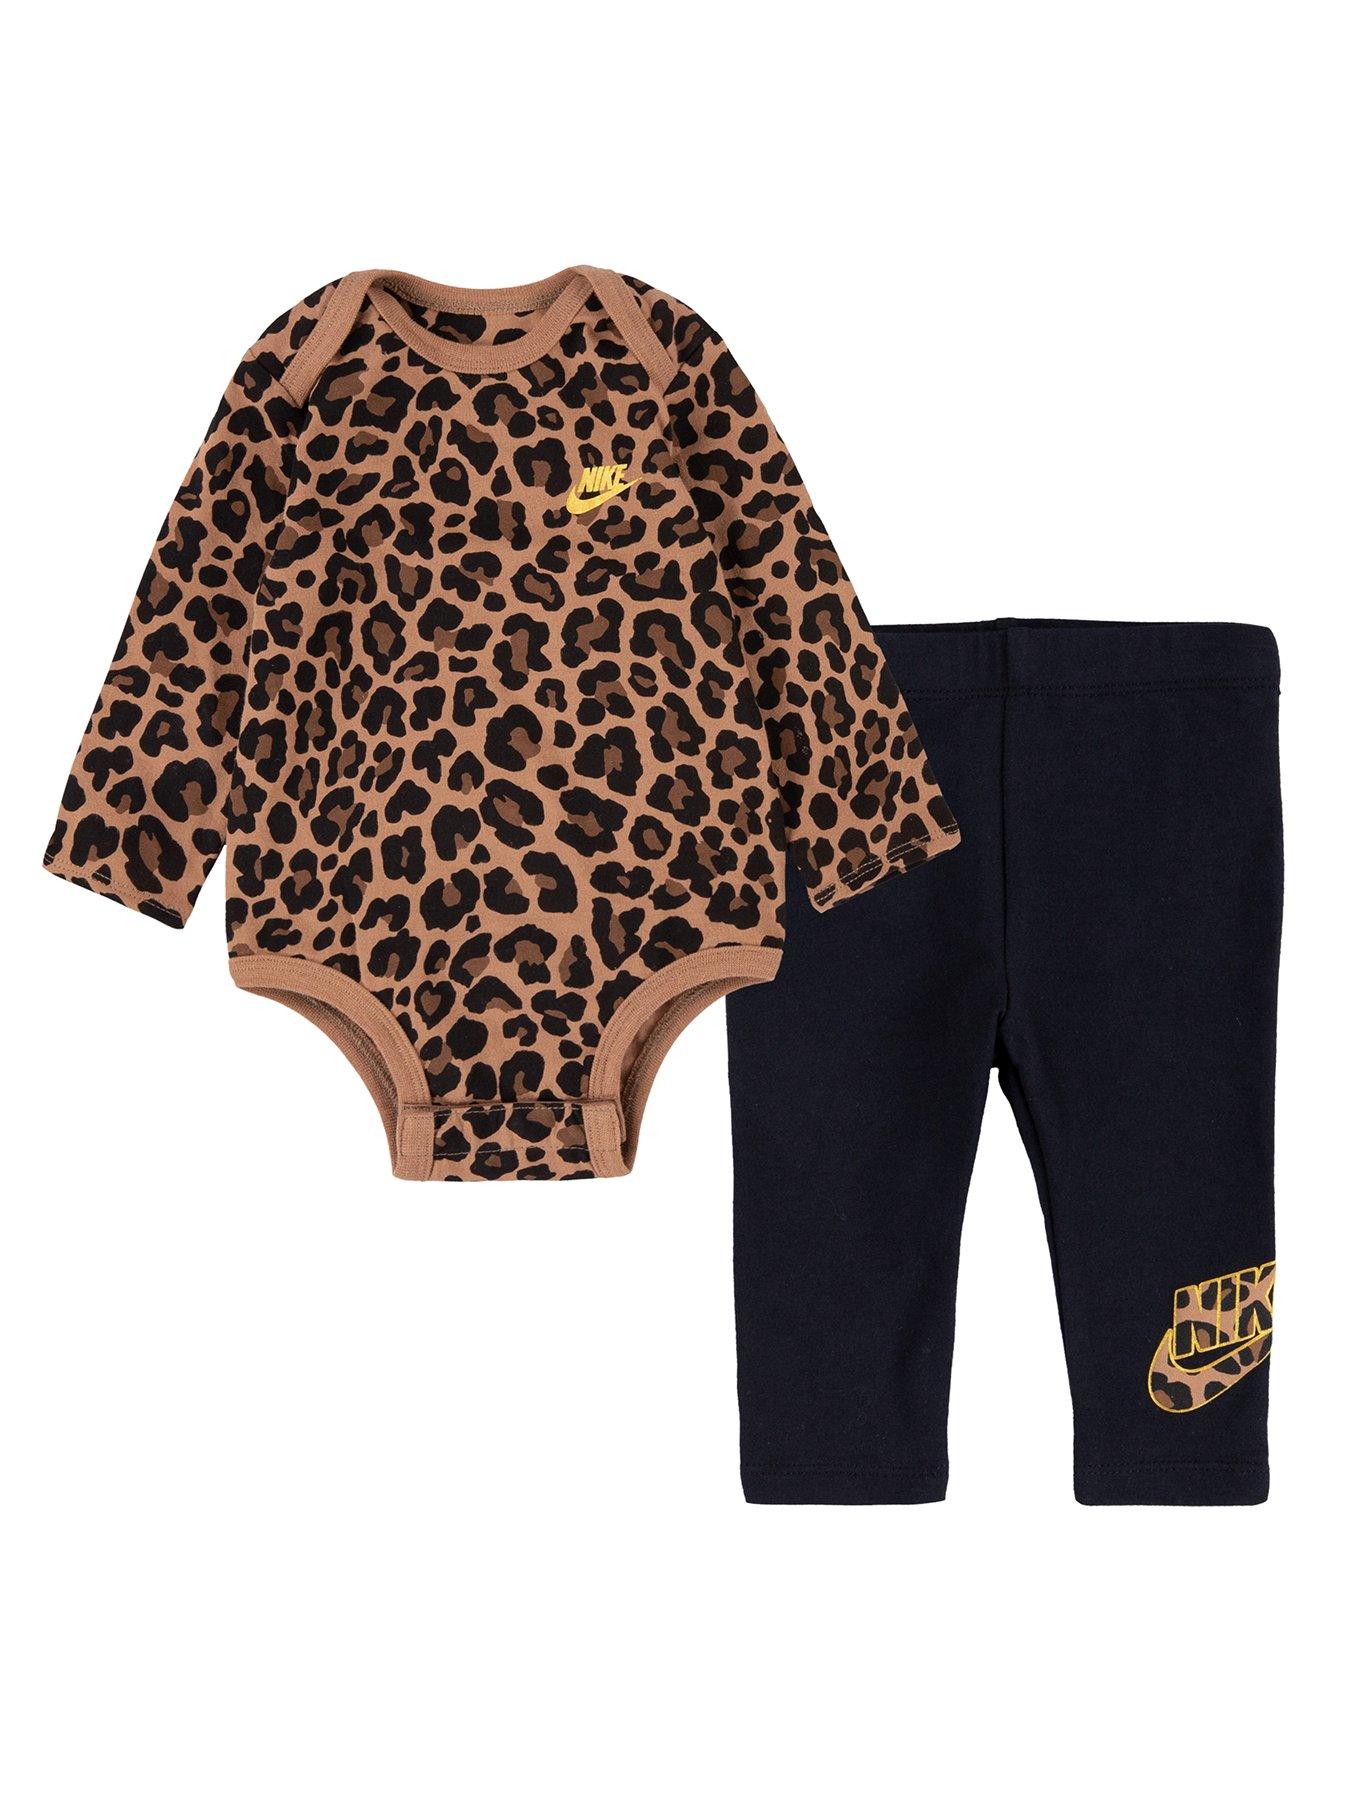  Leopard Futura Bodysuit Pant Set - Black/Gold